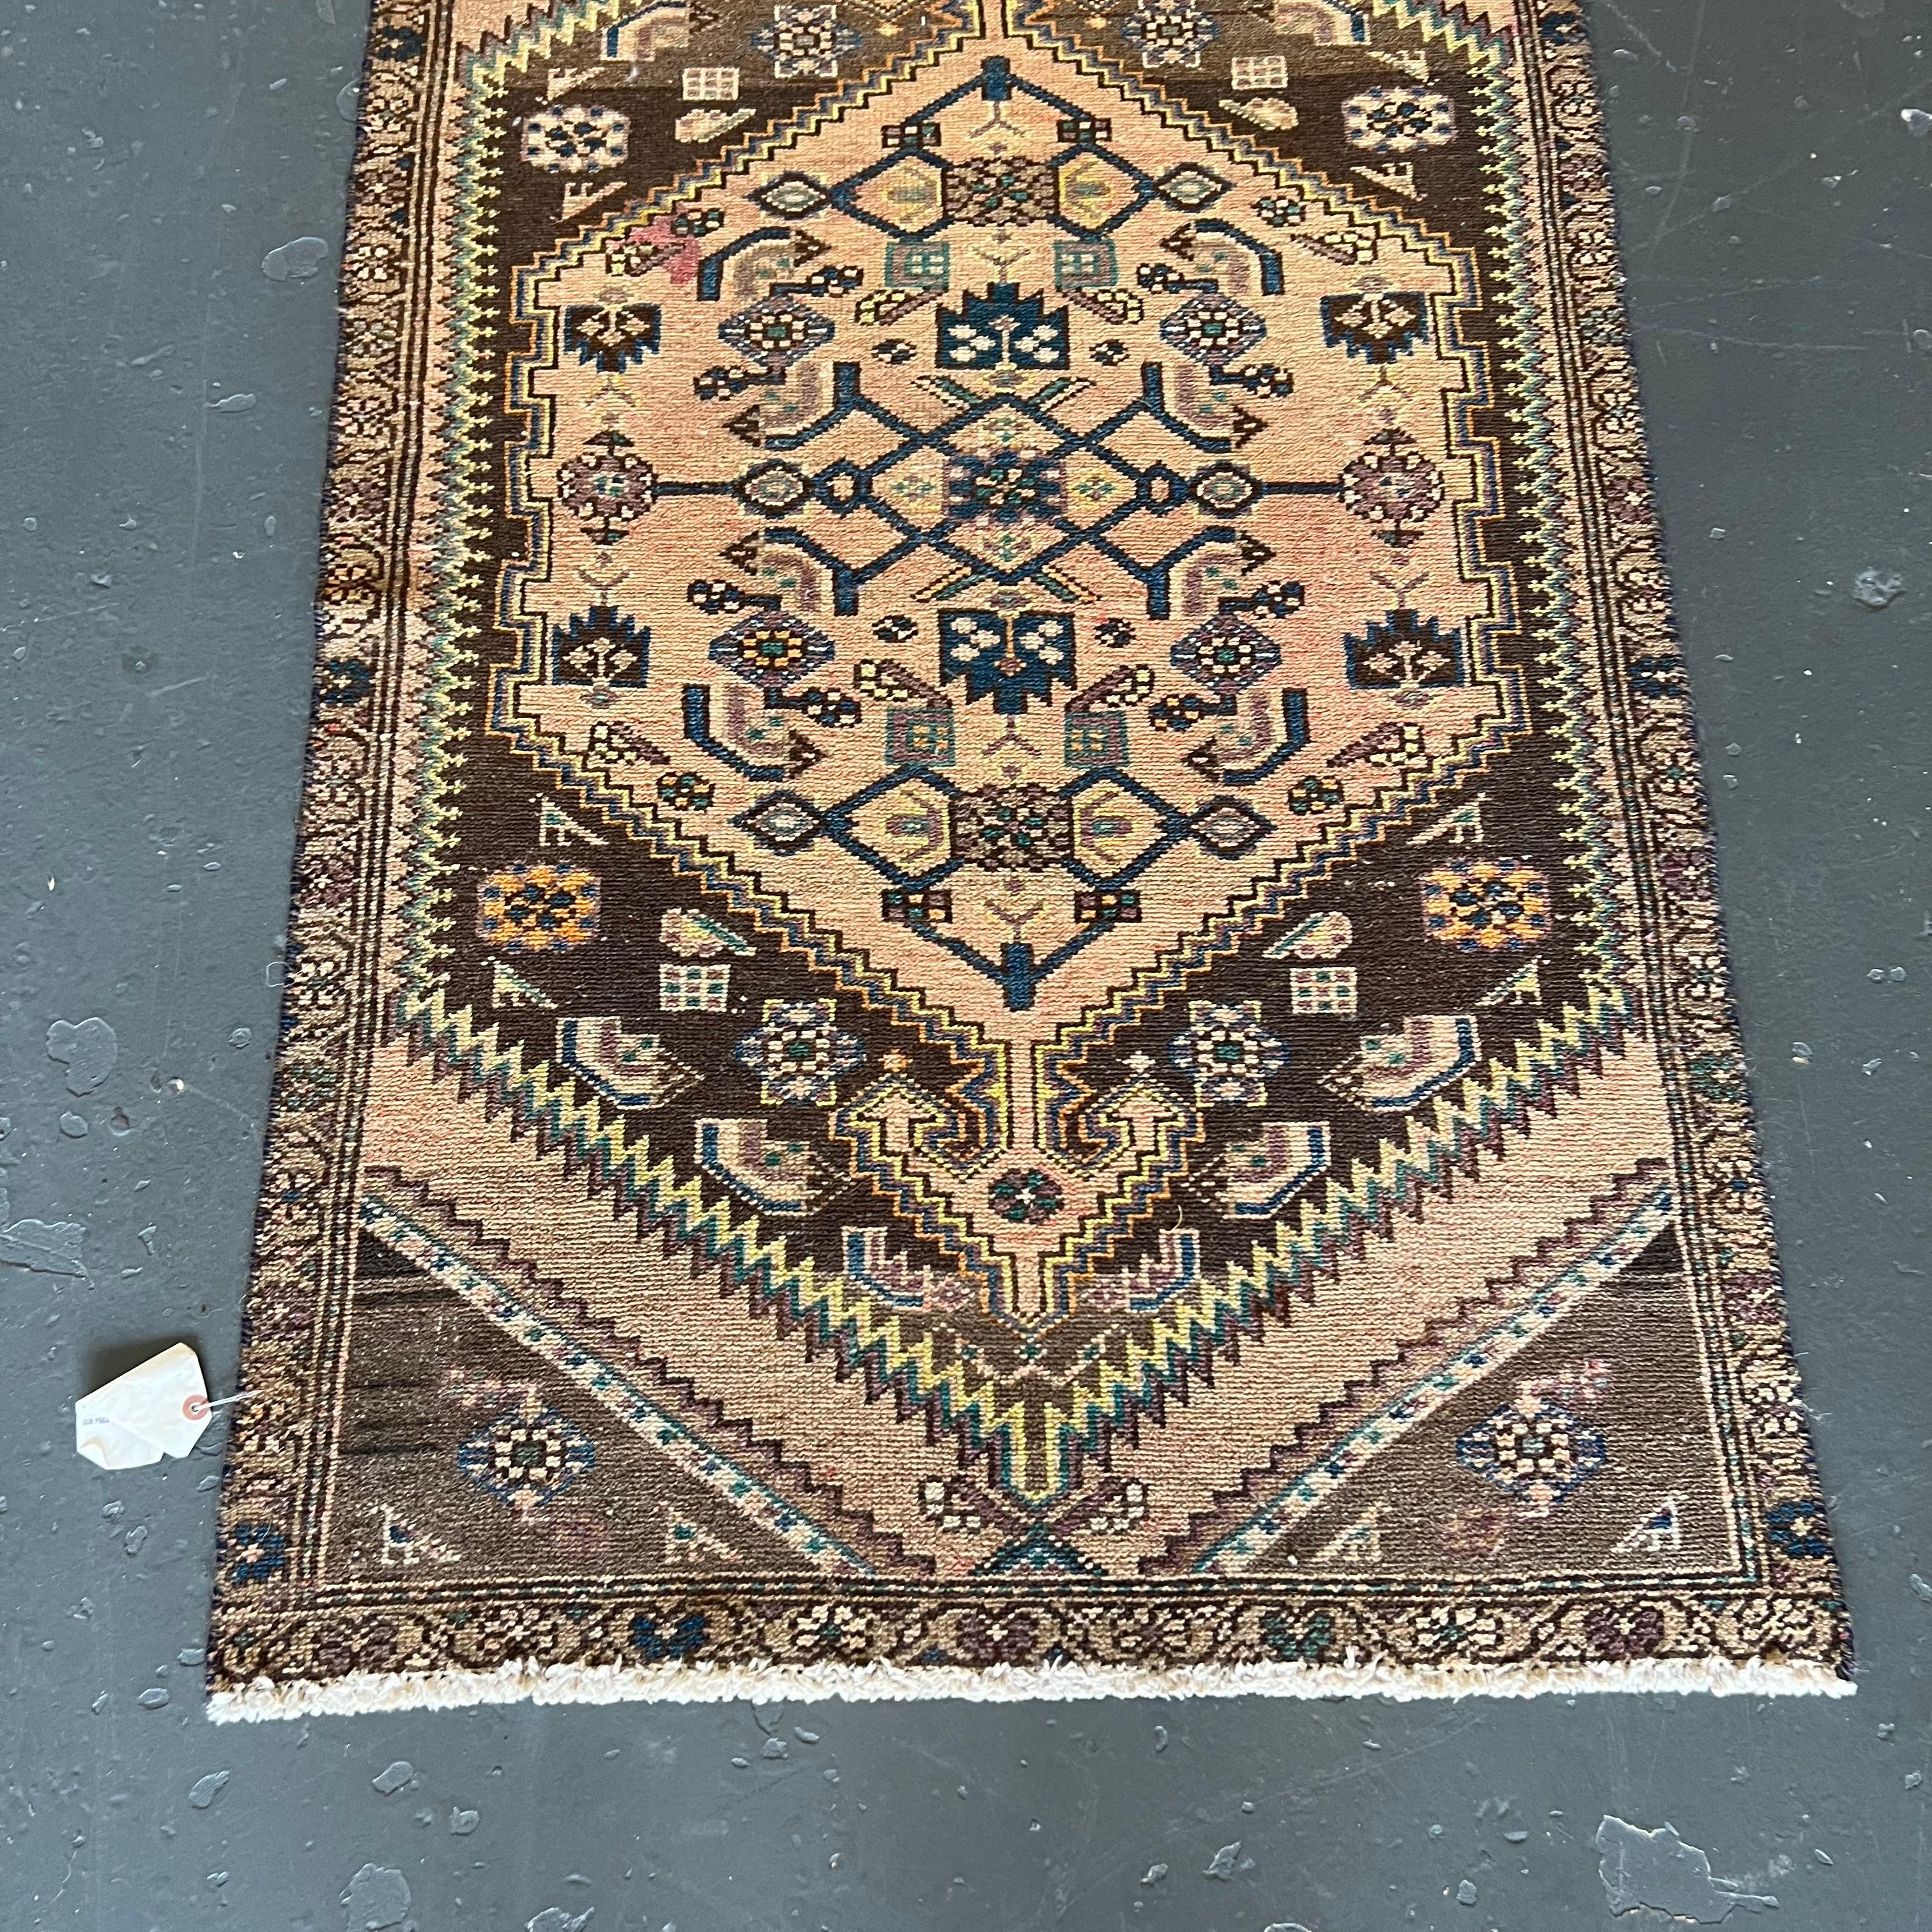 Vintage Persian hand woven runner / rug - measures 2’10 x 9’6.